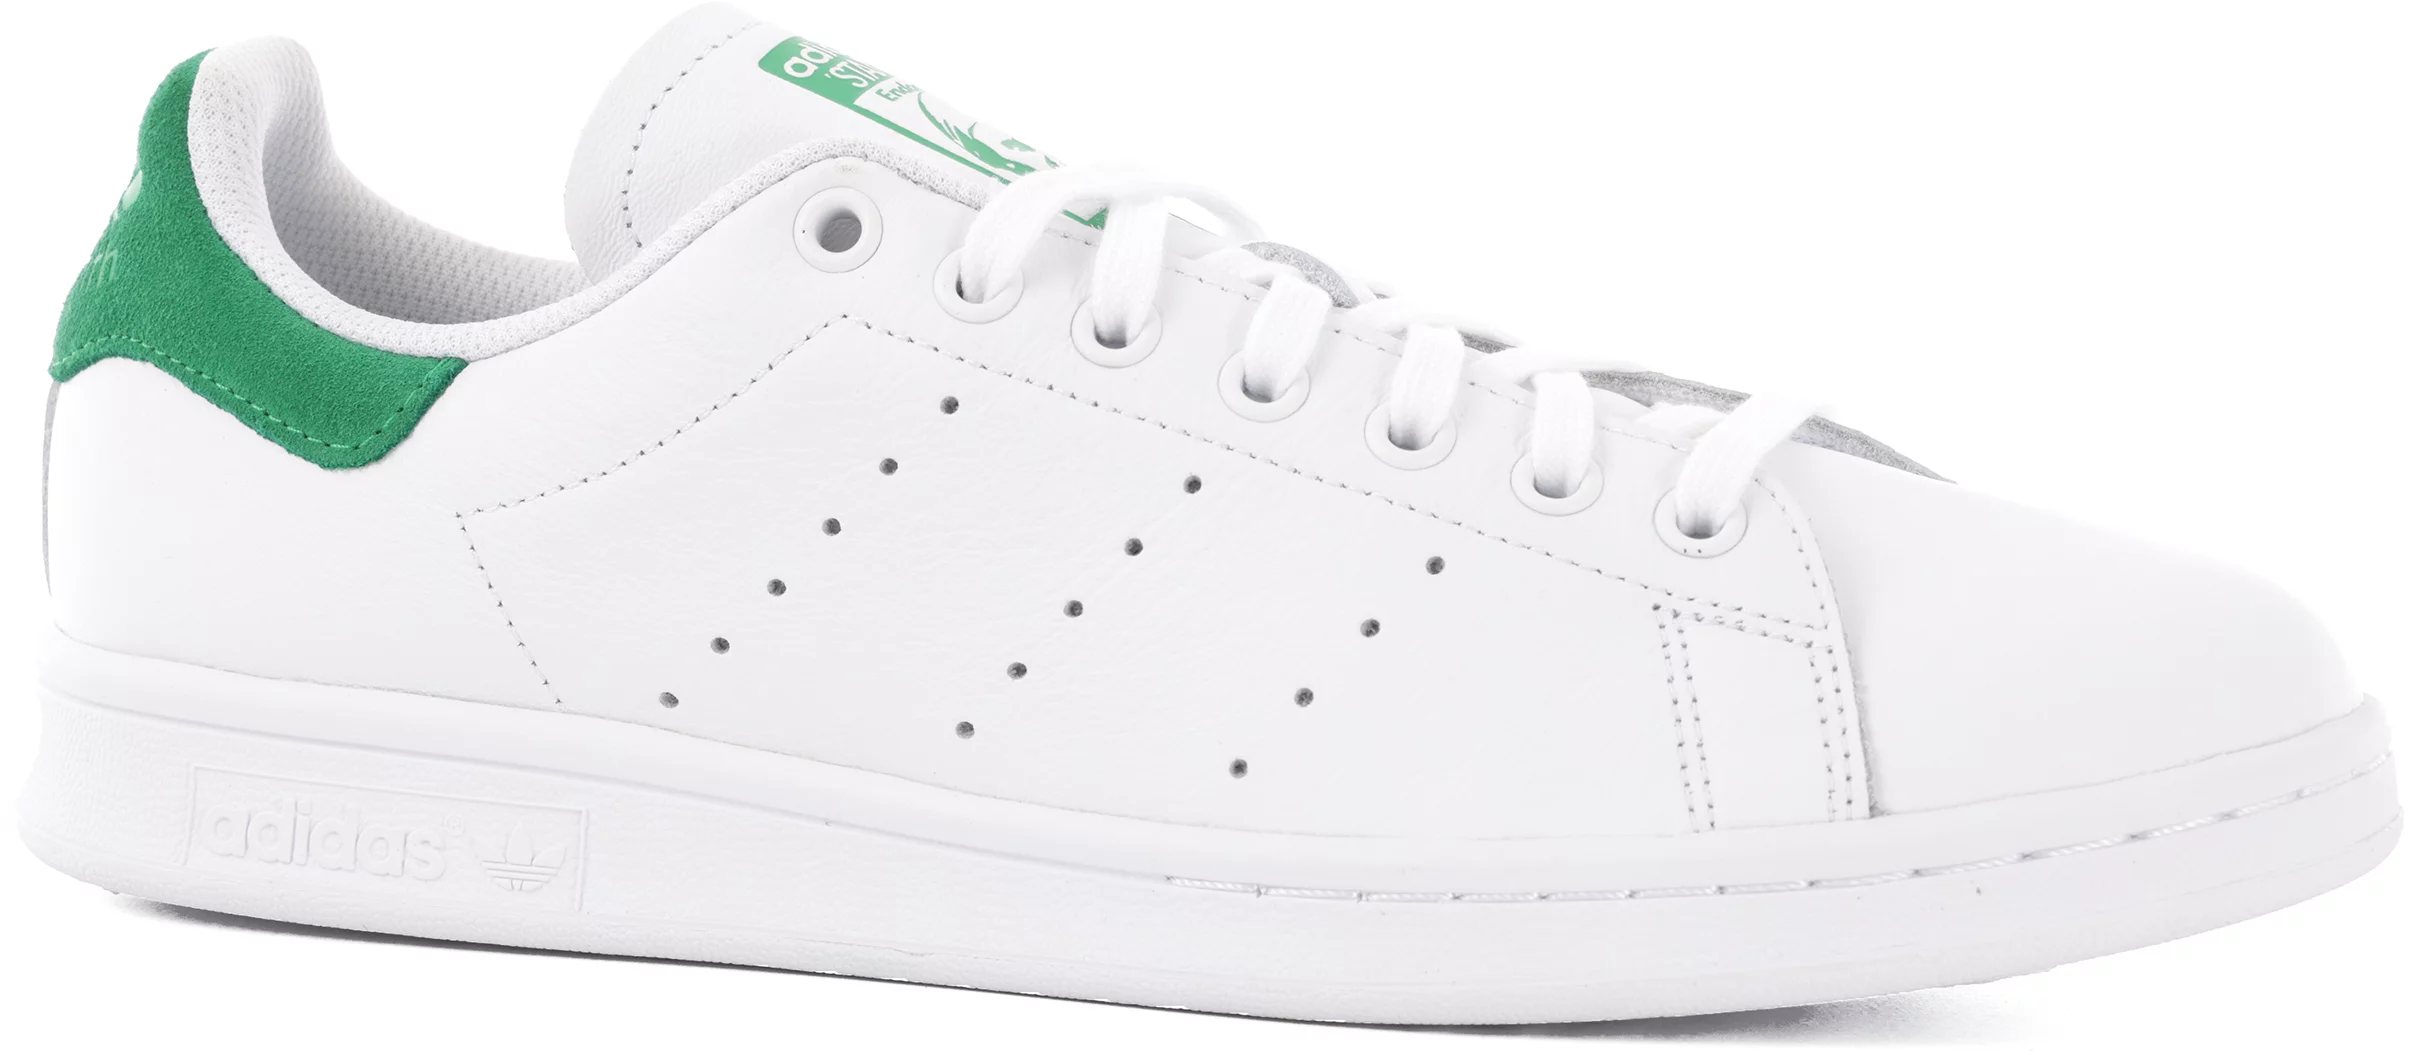 Prestatie Kast Verwoesten Adidas Stan Smith ADV Skate Shoes - footwear white/footwear white/green -  Free Shipping | Tactics